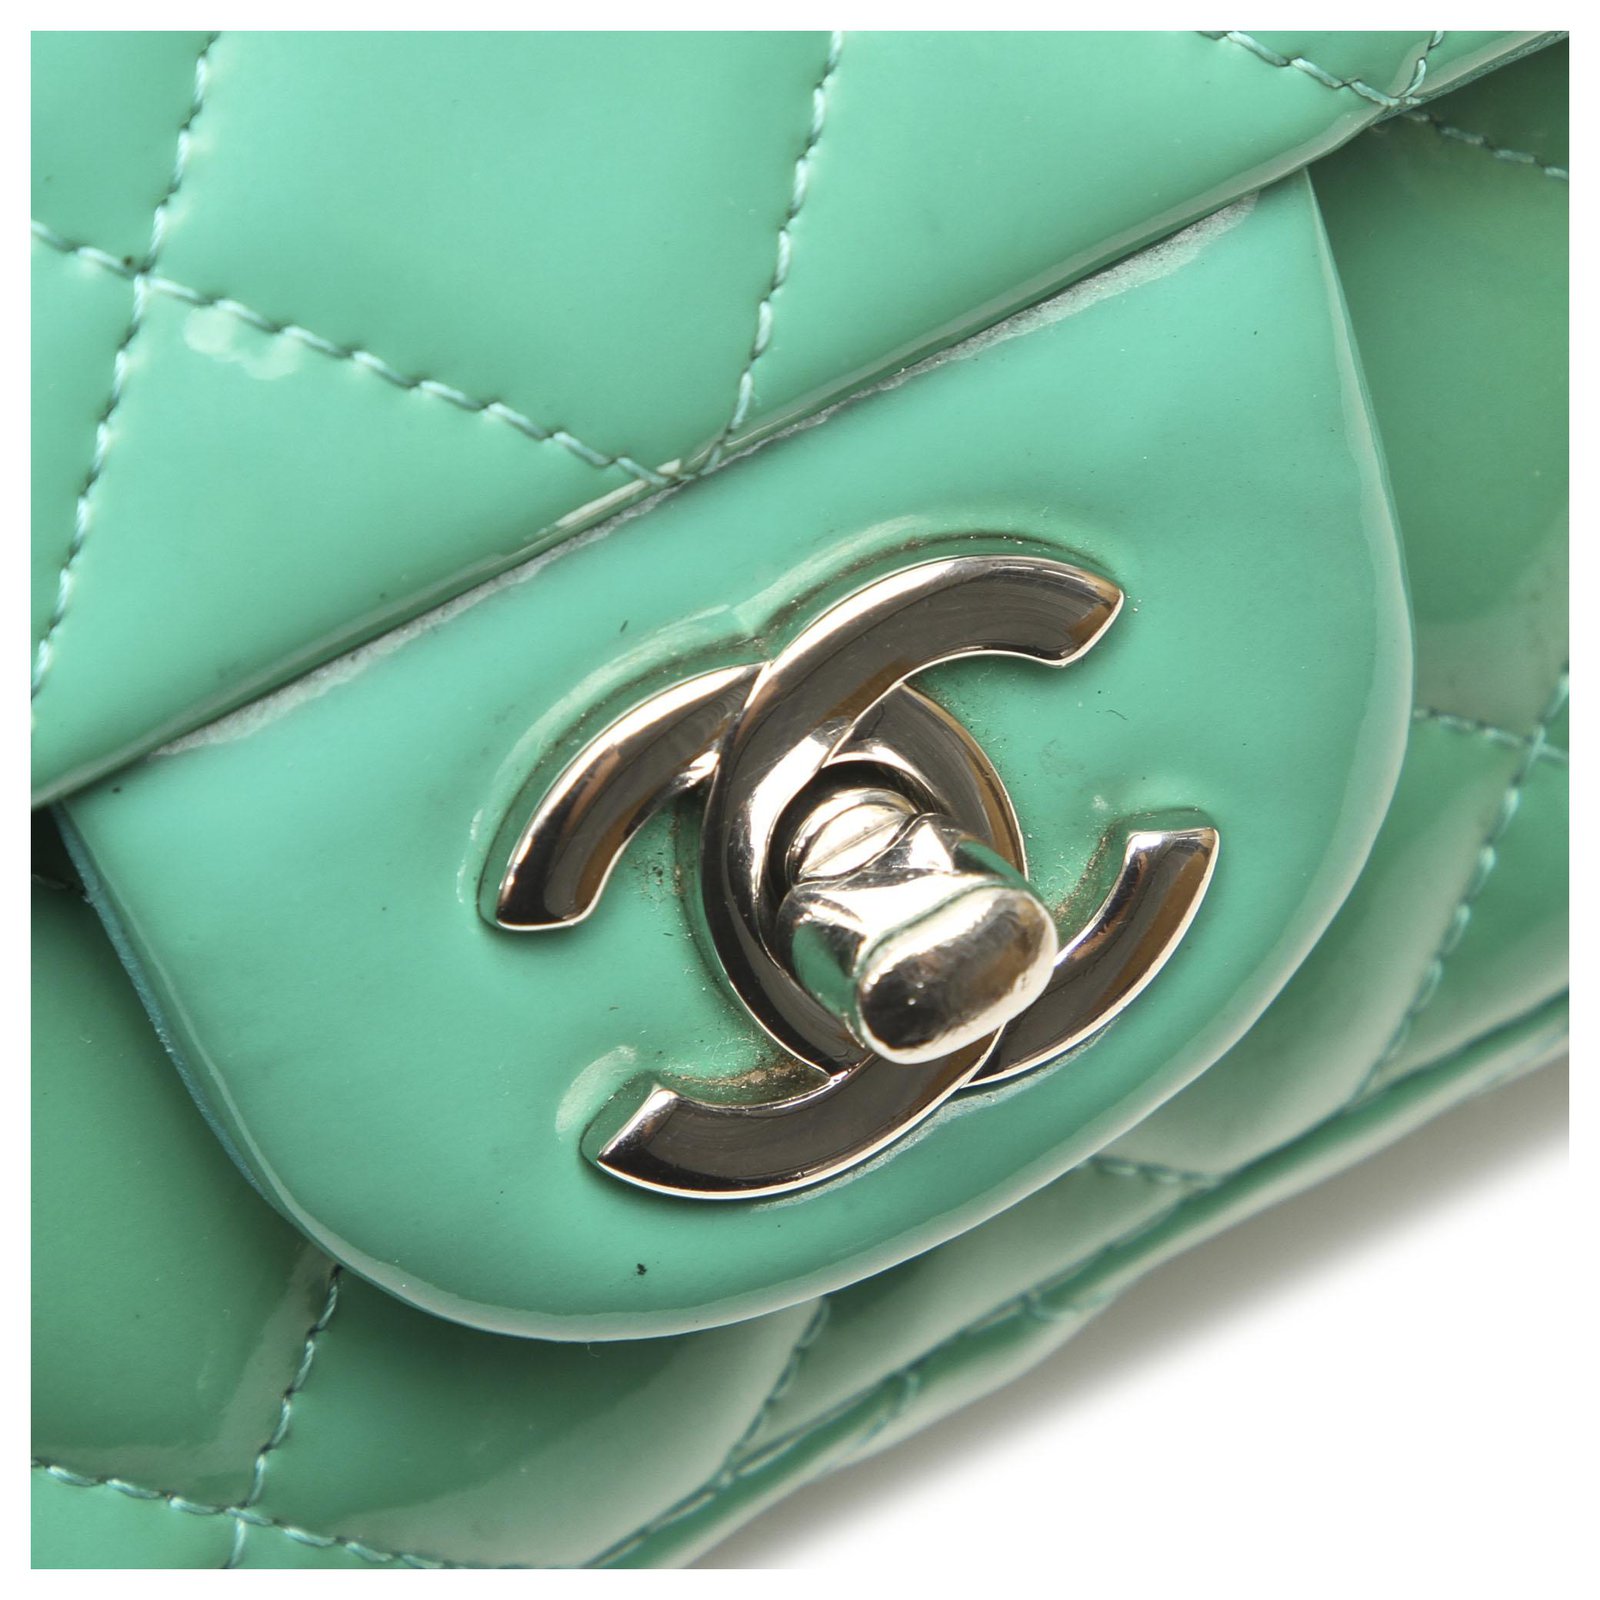 Chanel Green Classic New Mini Patent Leather Flap Bag ref.217379